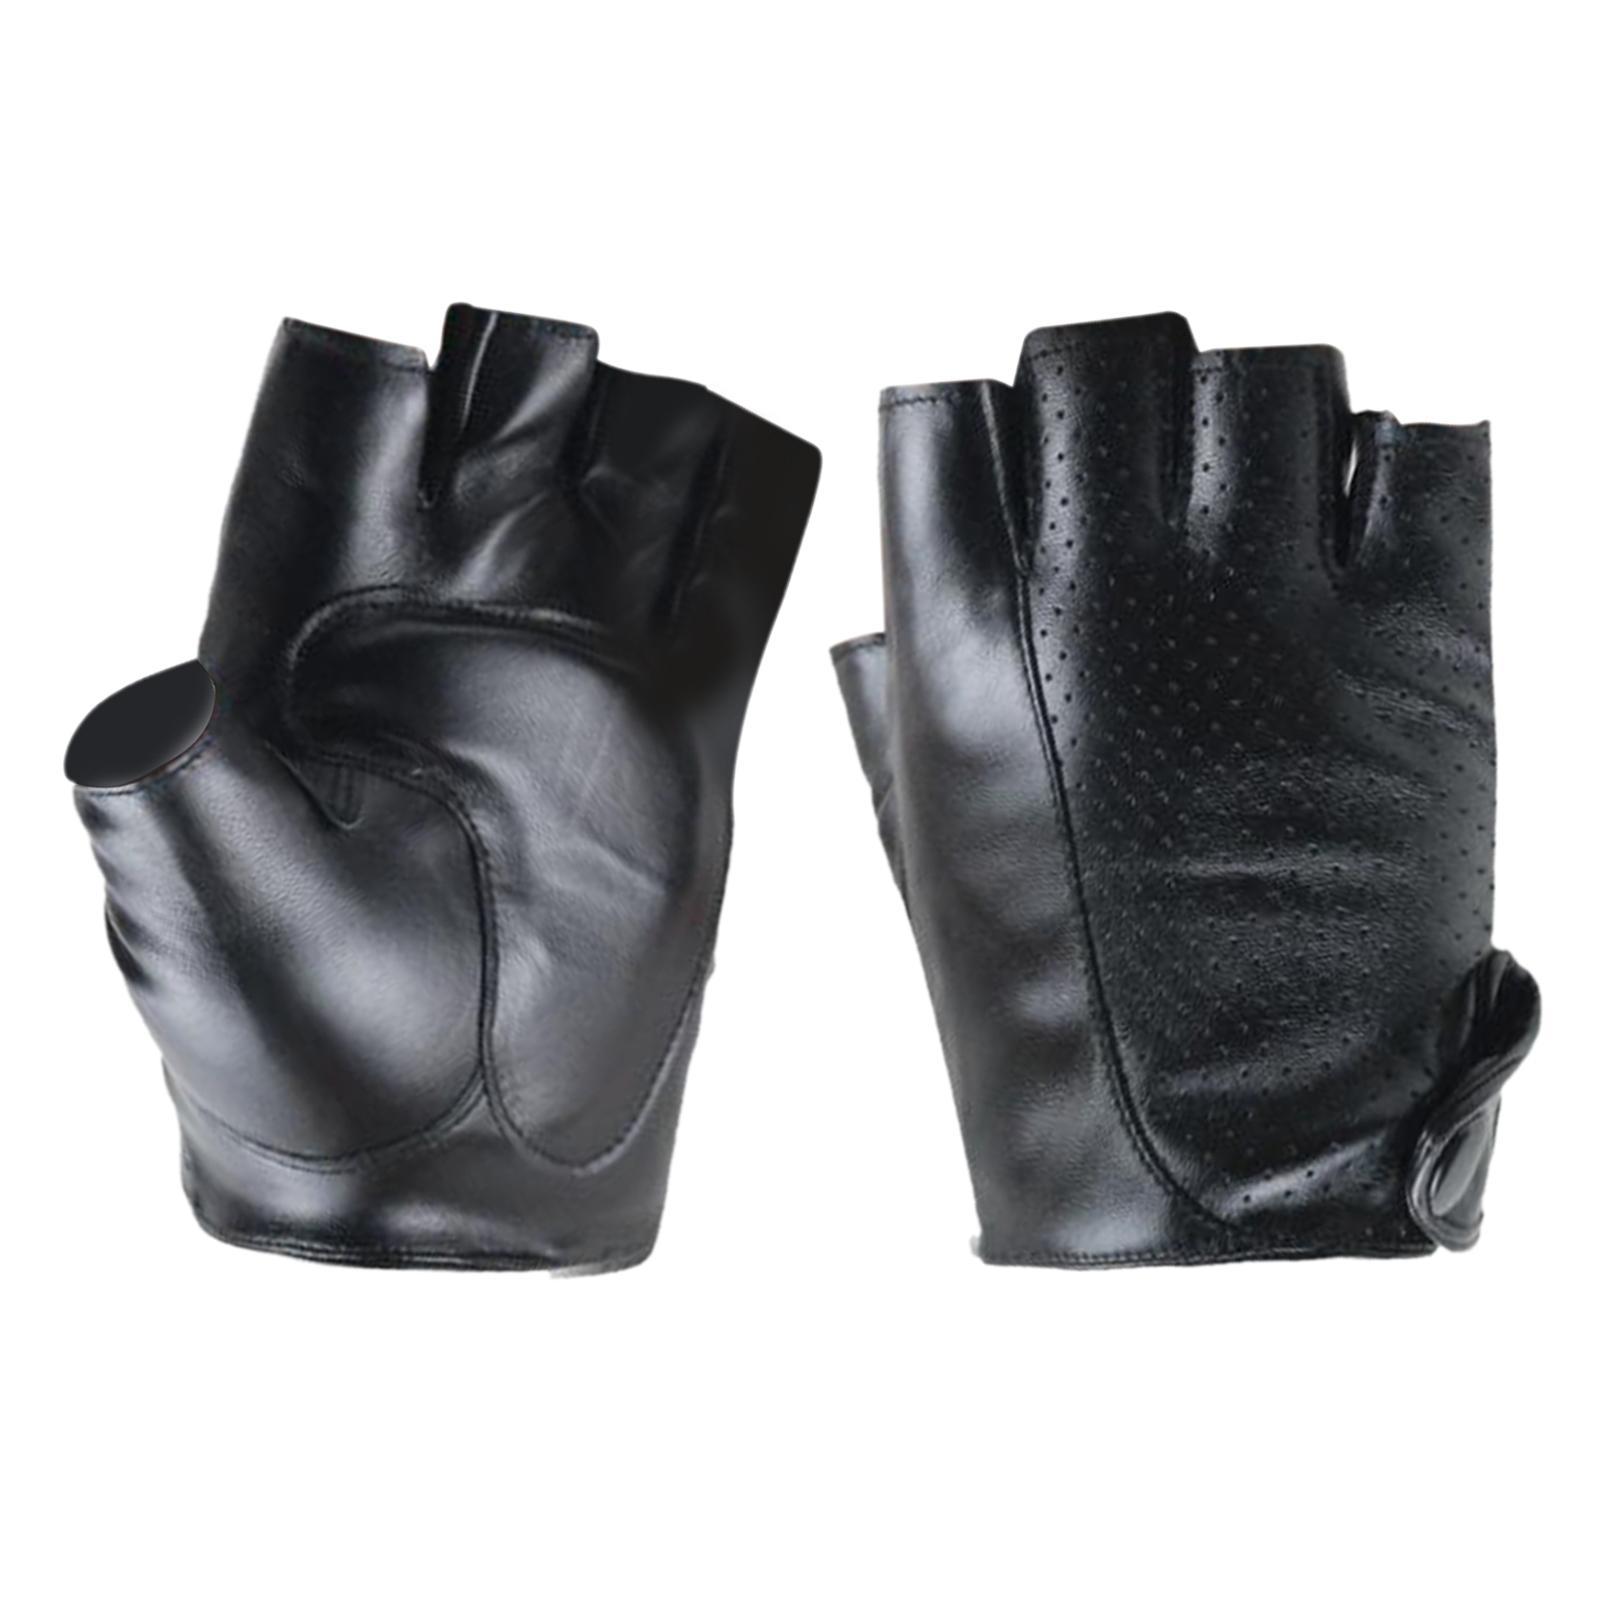 Wear Resistant Half Finger Gloves Lightweight PU Leather Gloves for Driving